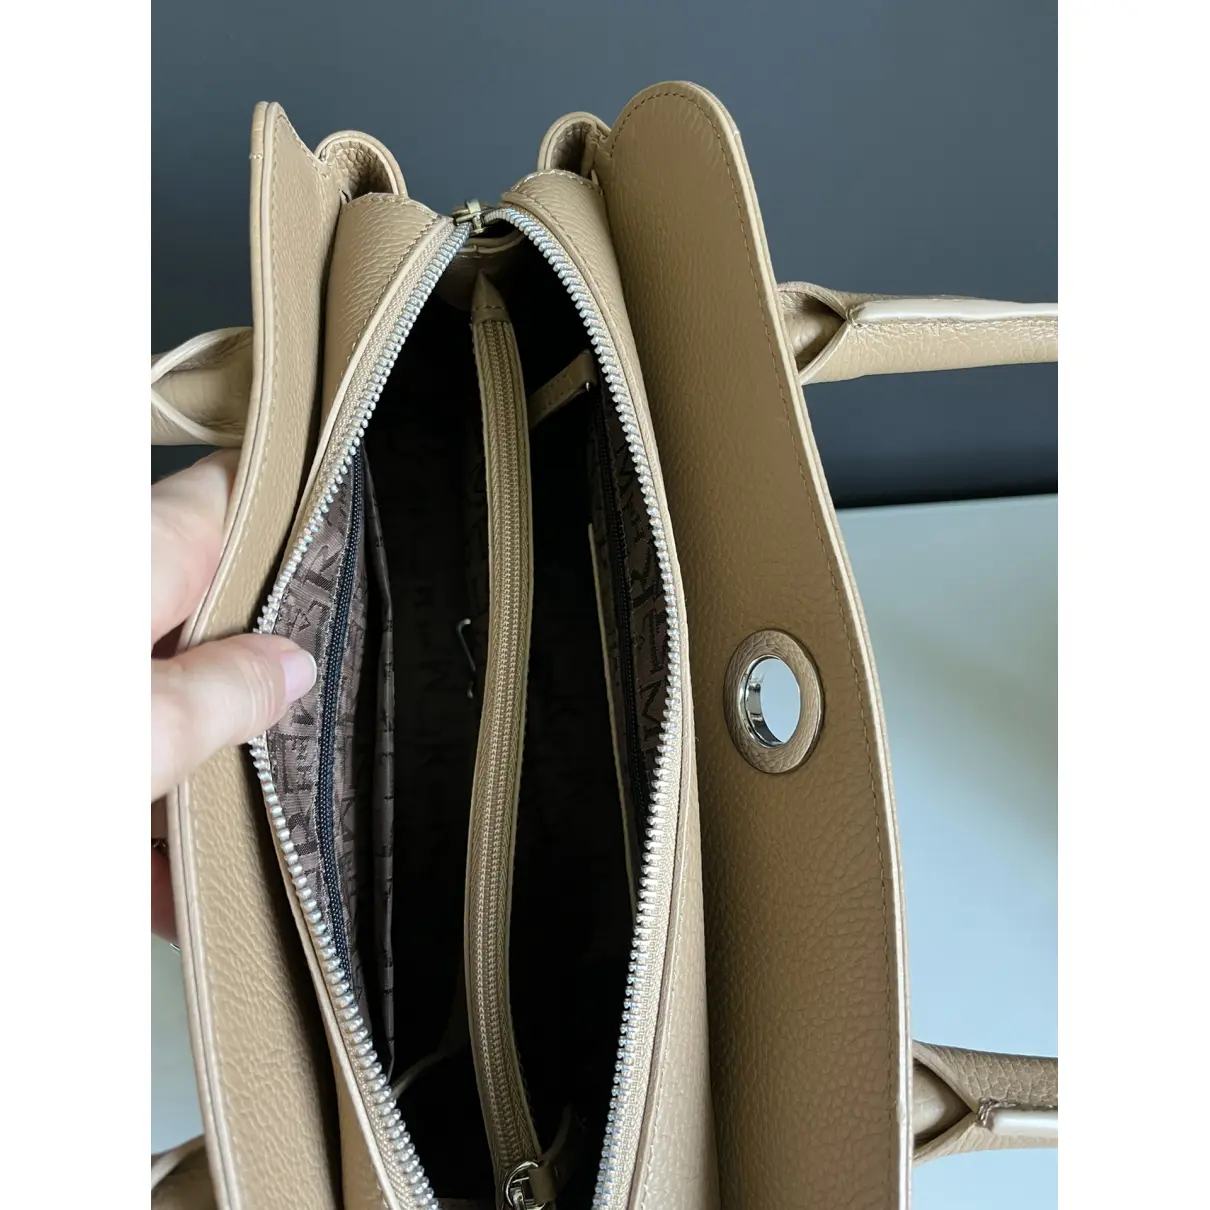 Buy LAMARTHE Leather handbag online